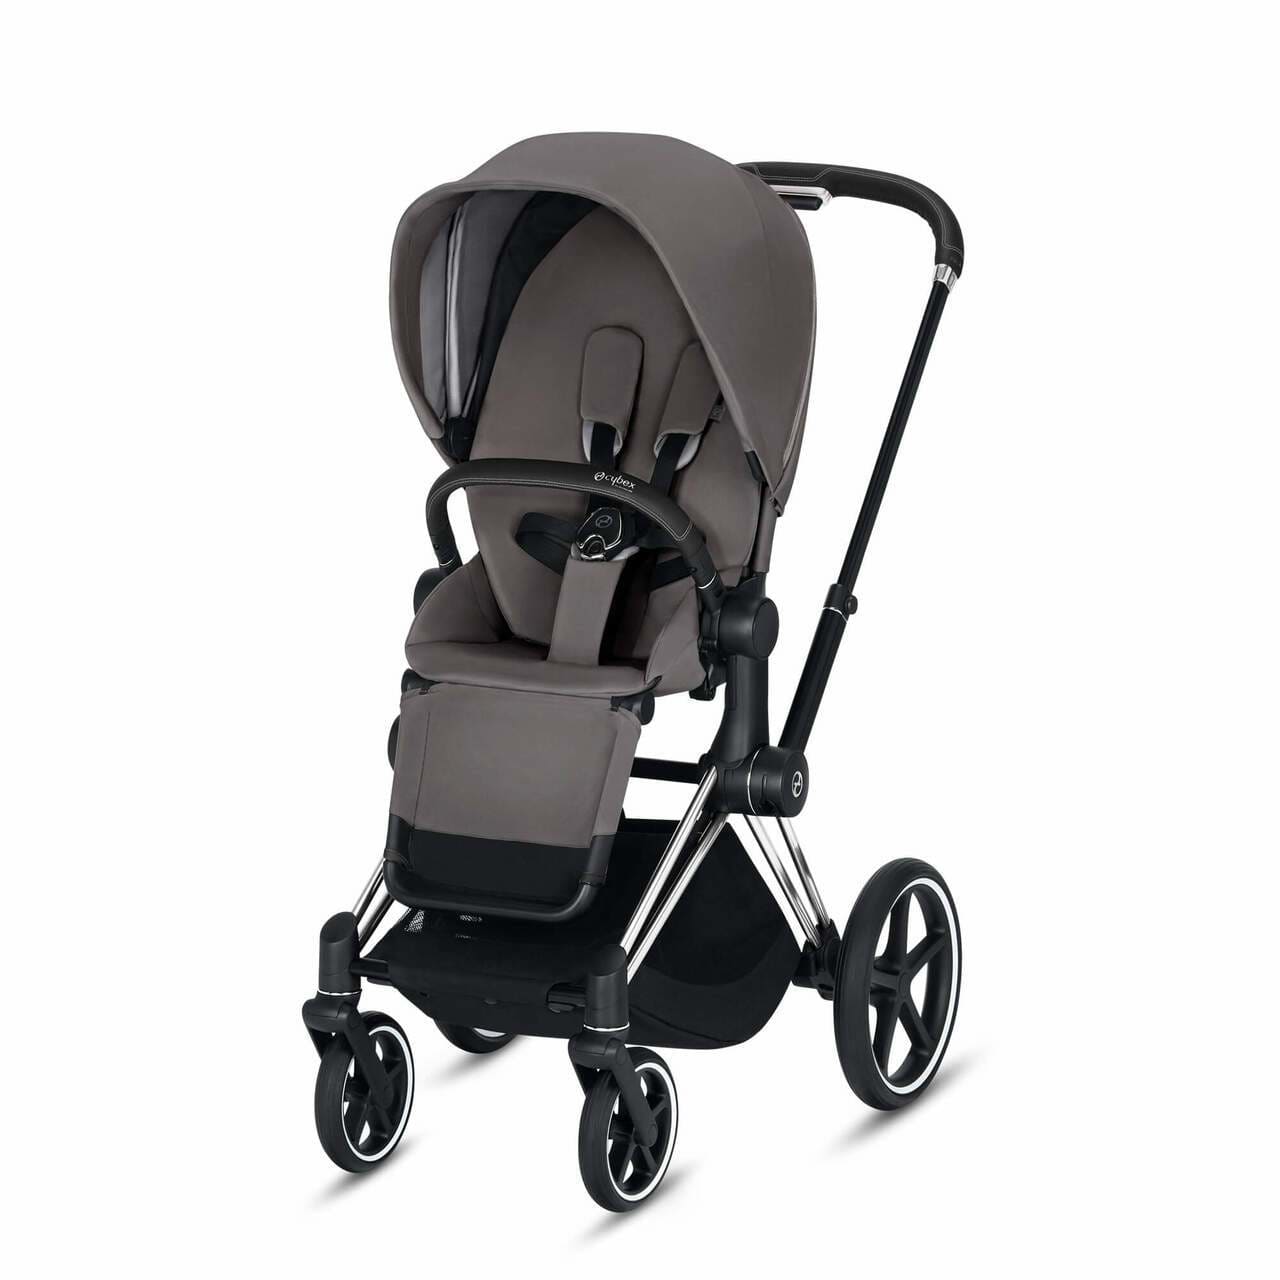 CYBEX Priam 3-in-1 Travel System Chrome with Black Details Baby Stroller – Manhattan Grey 519003533 4058511706467